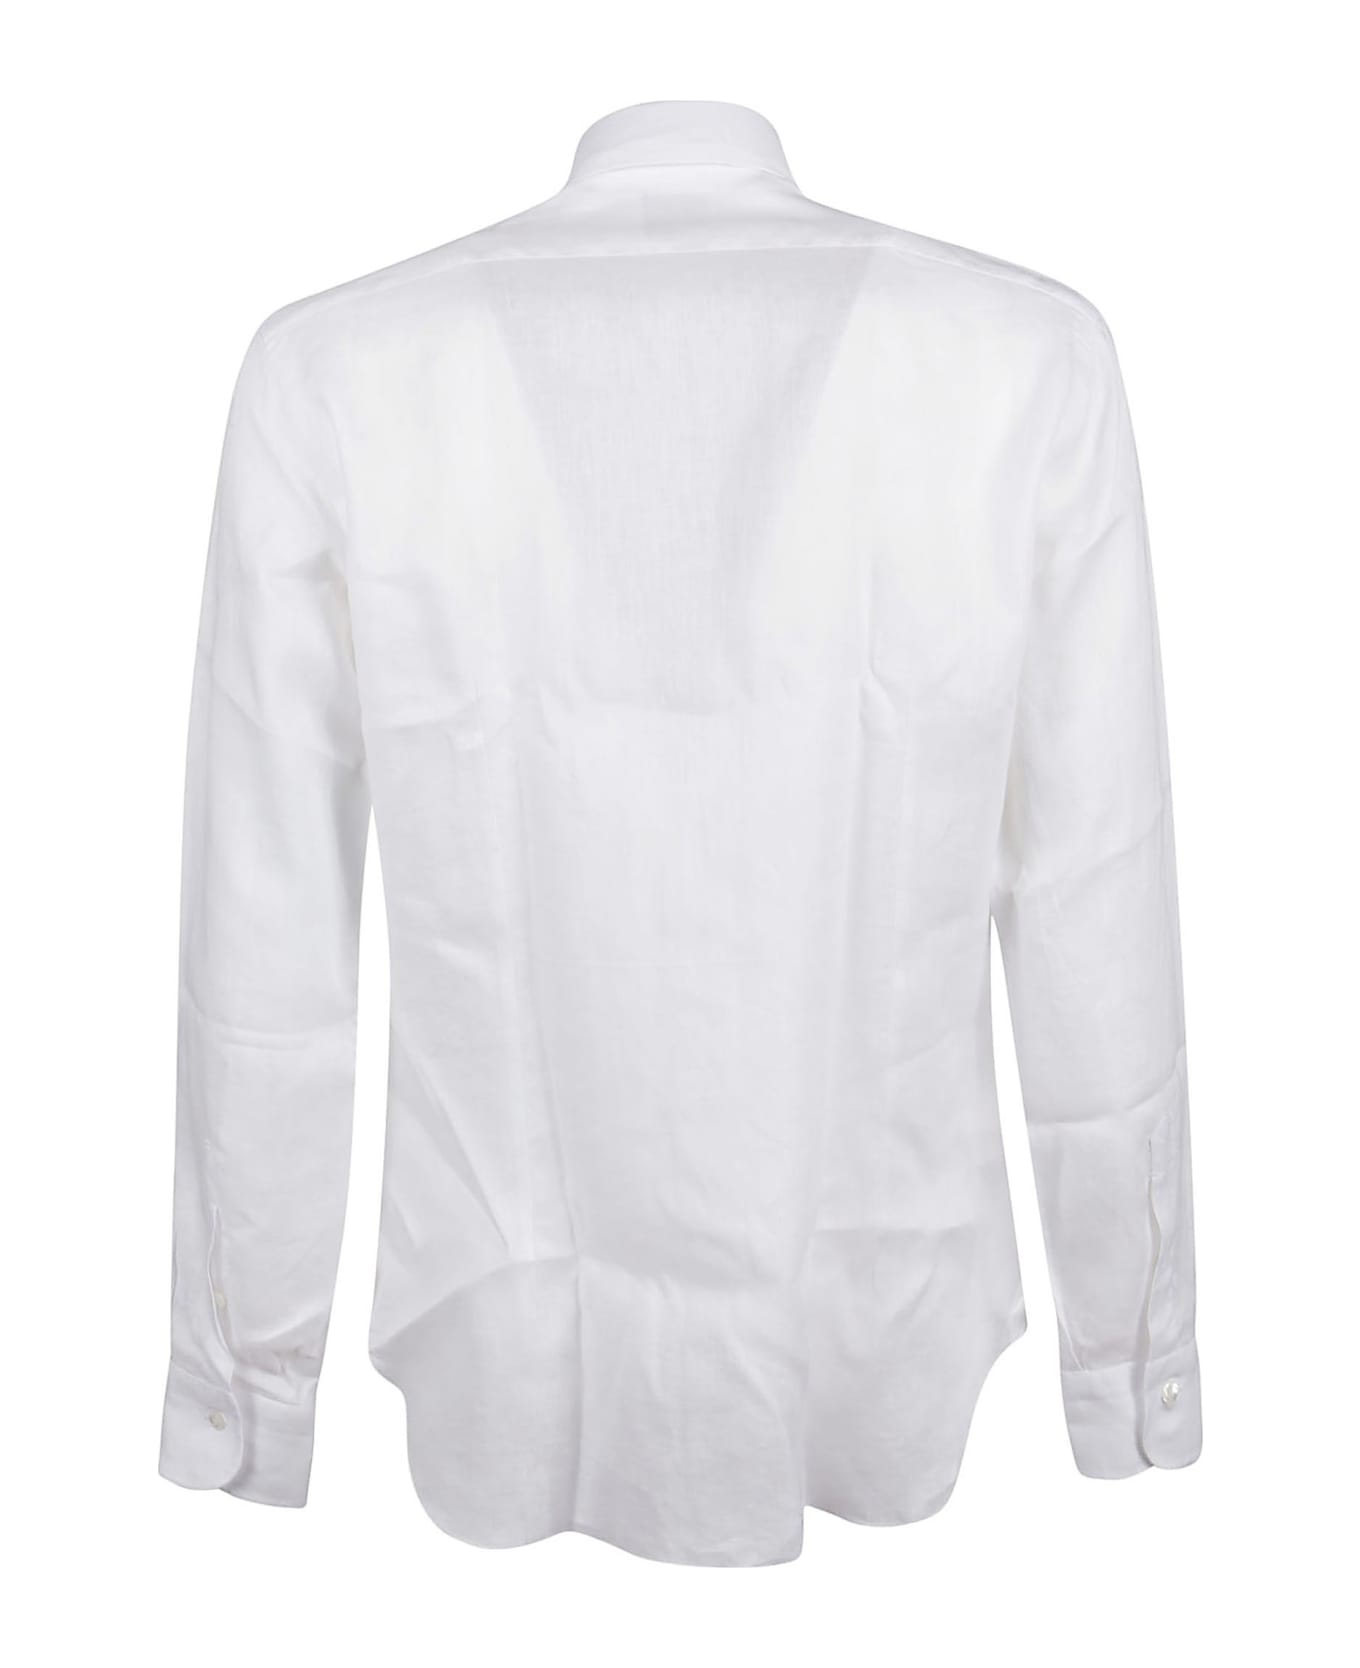 Barba Napoli Long Sleeve Shirt - Bianco